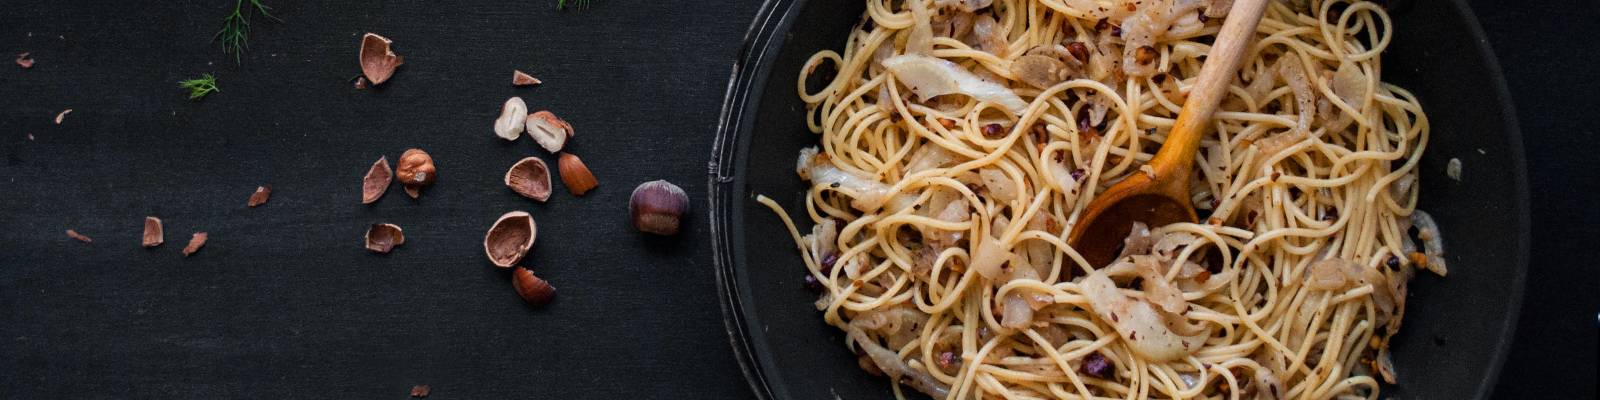 Pasta Garofalo - Spaghetti mit Fenchel in Haselnussbutter – Sara Heinen